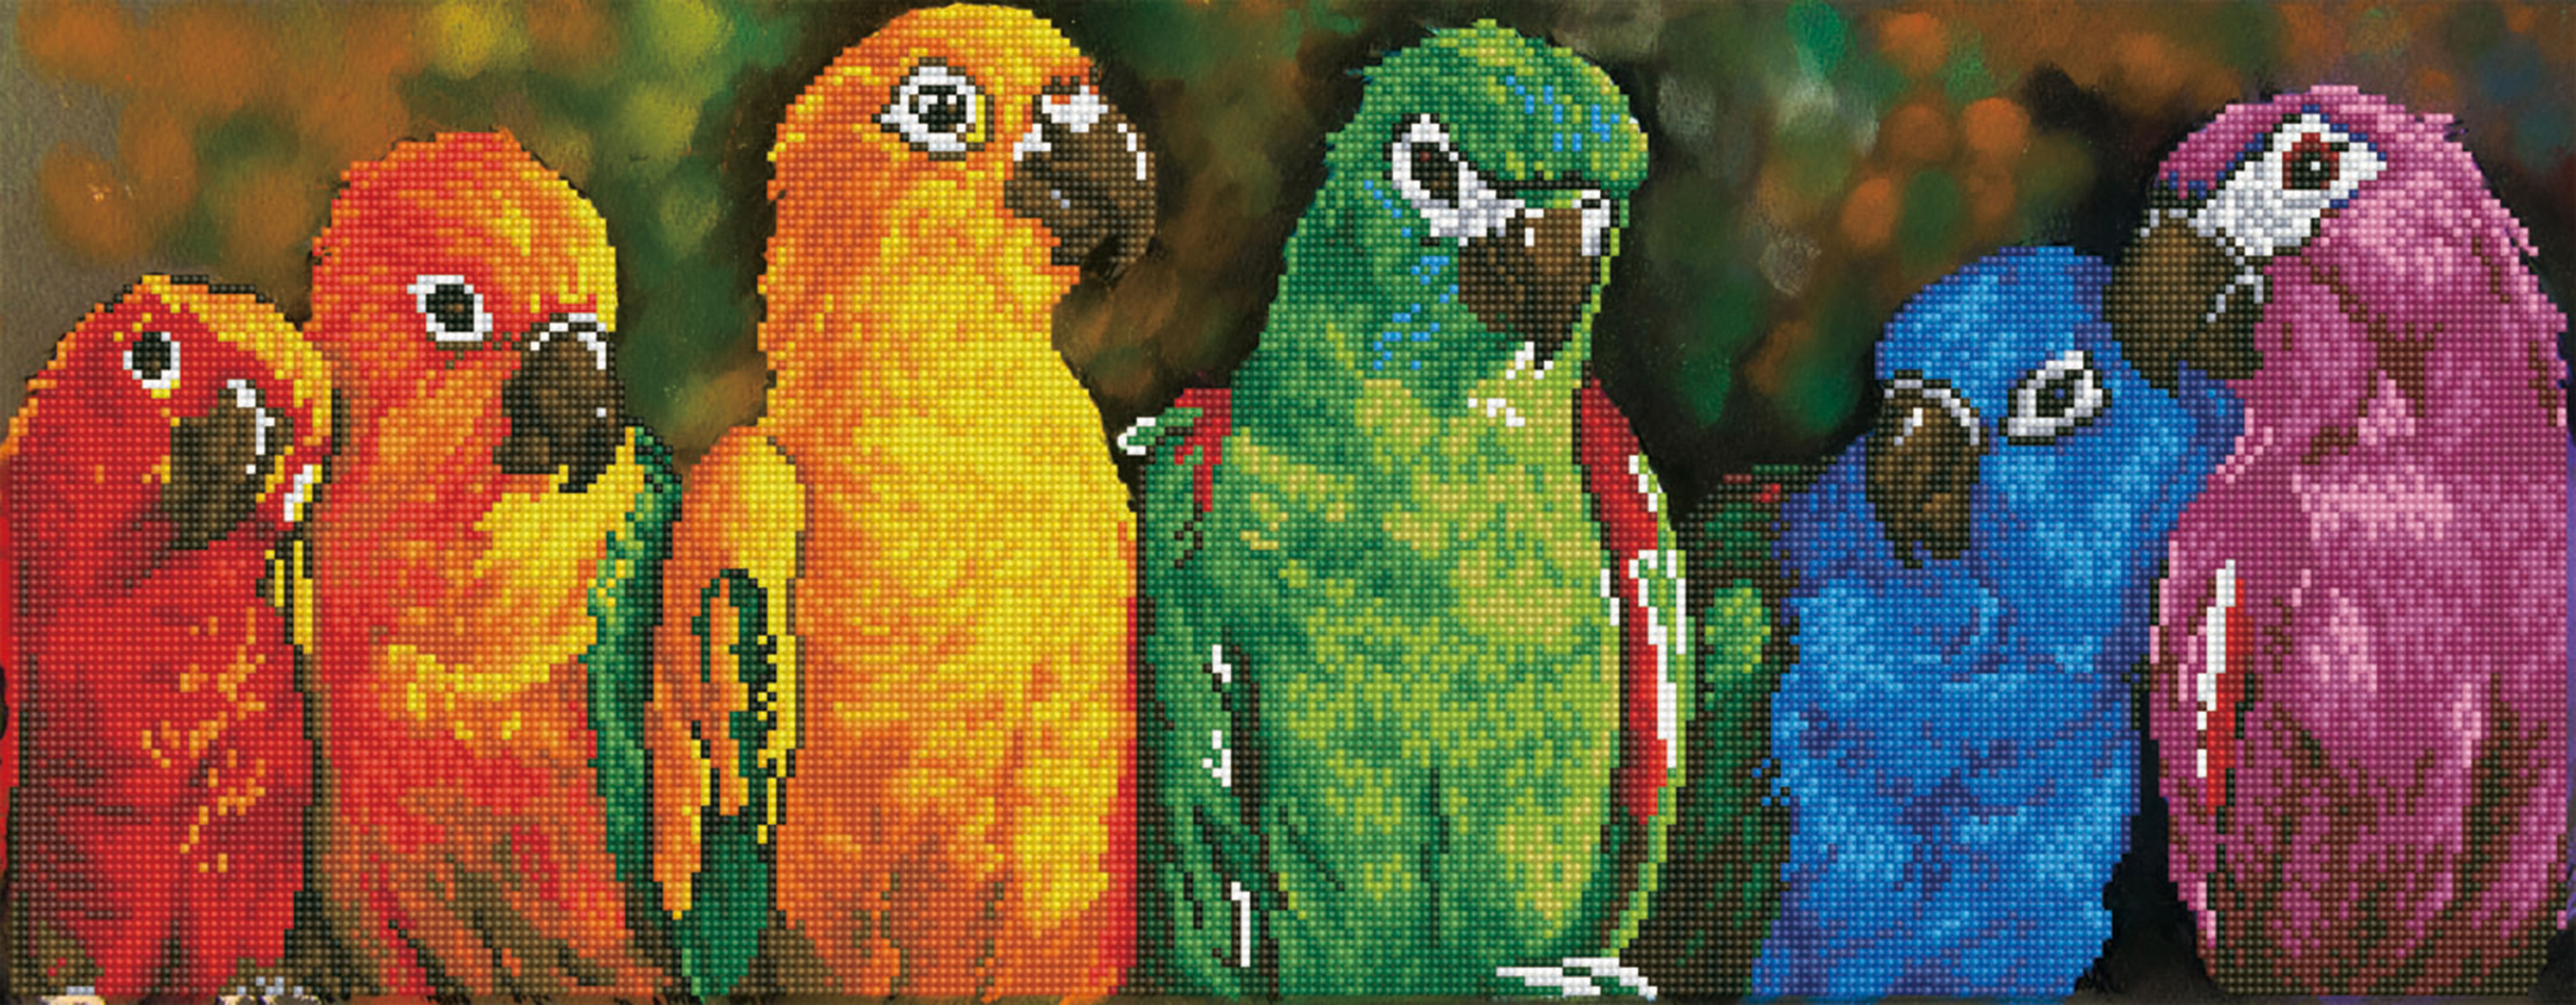 Picture of Diamond Painting Kit: Rainbow Parrots